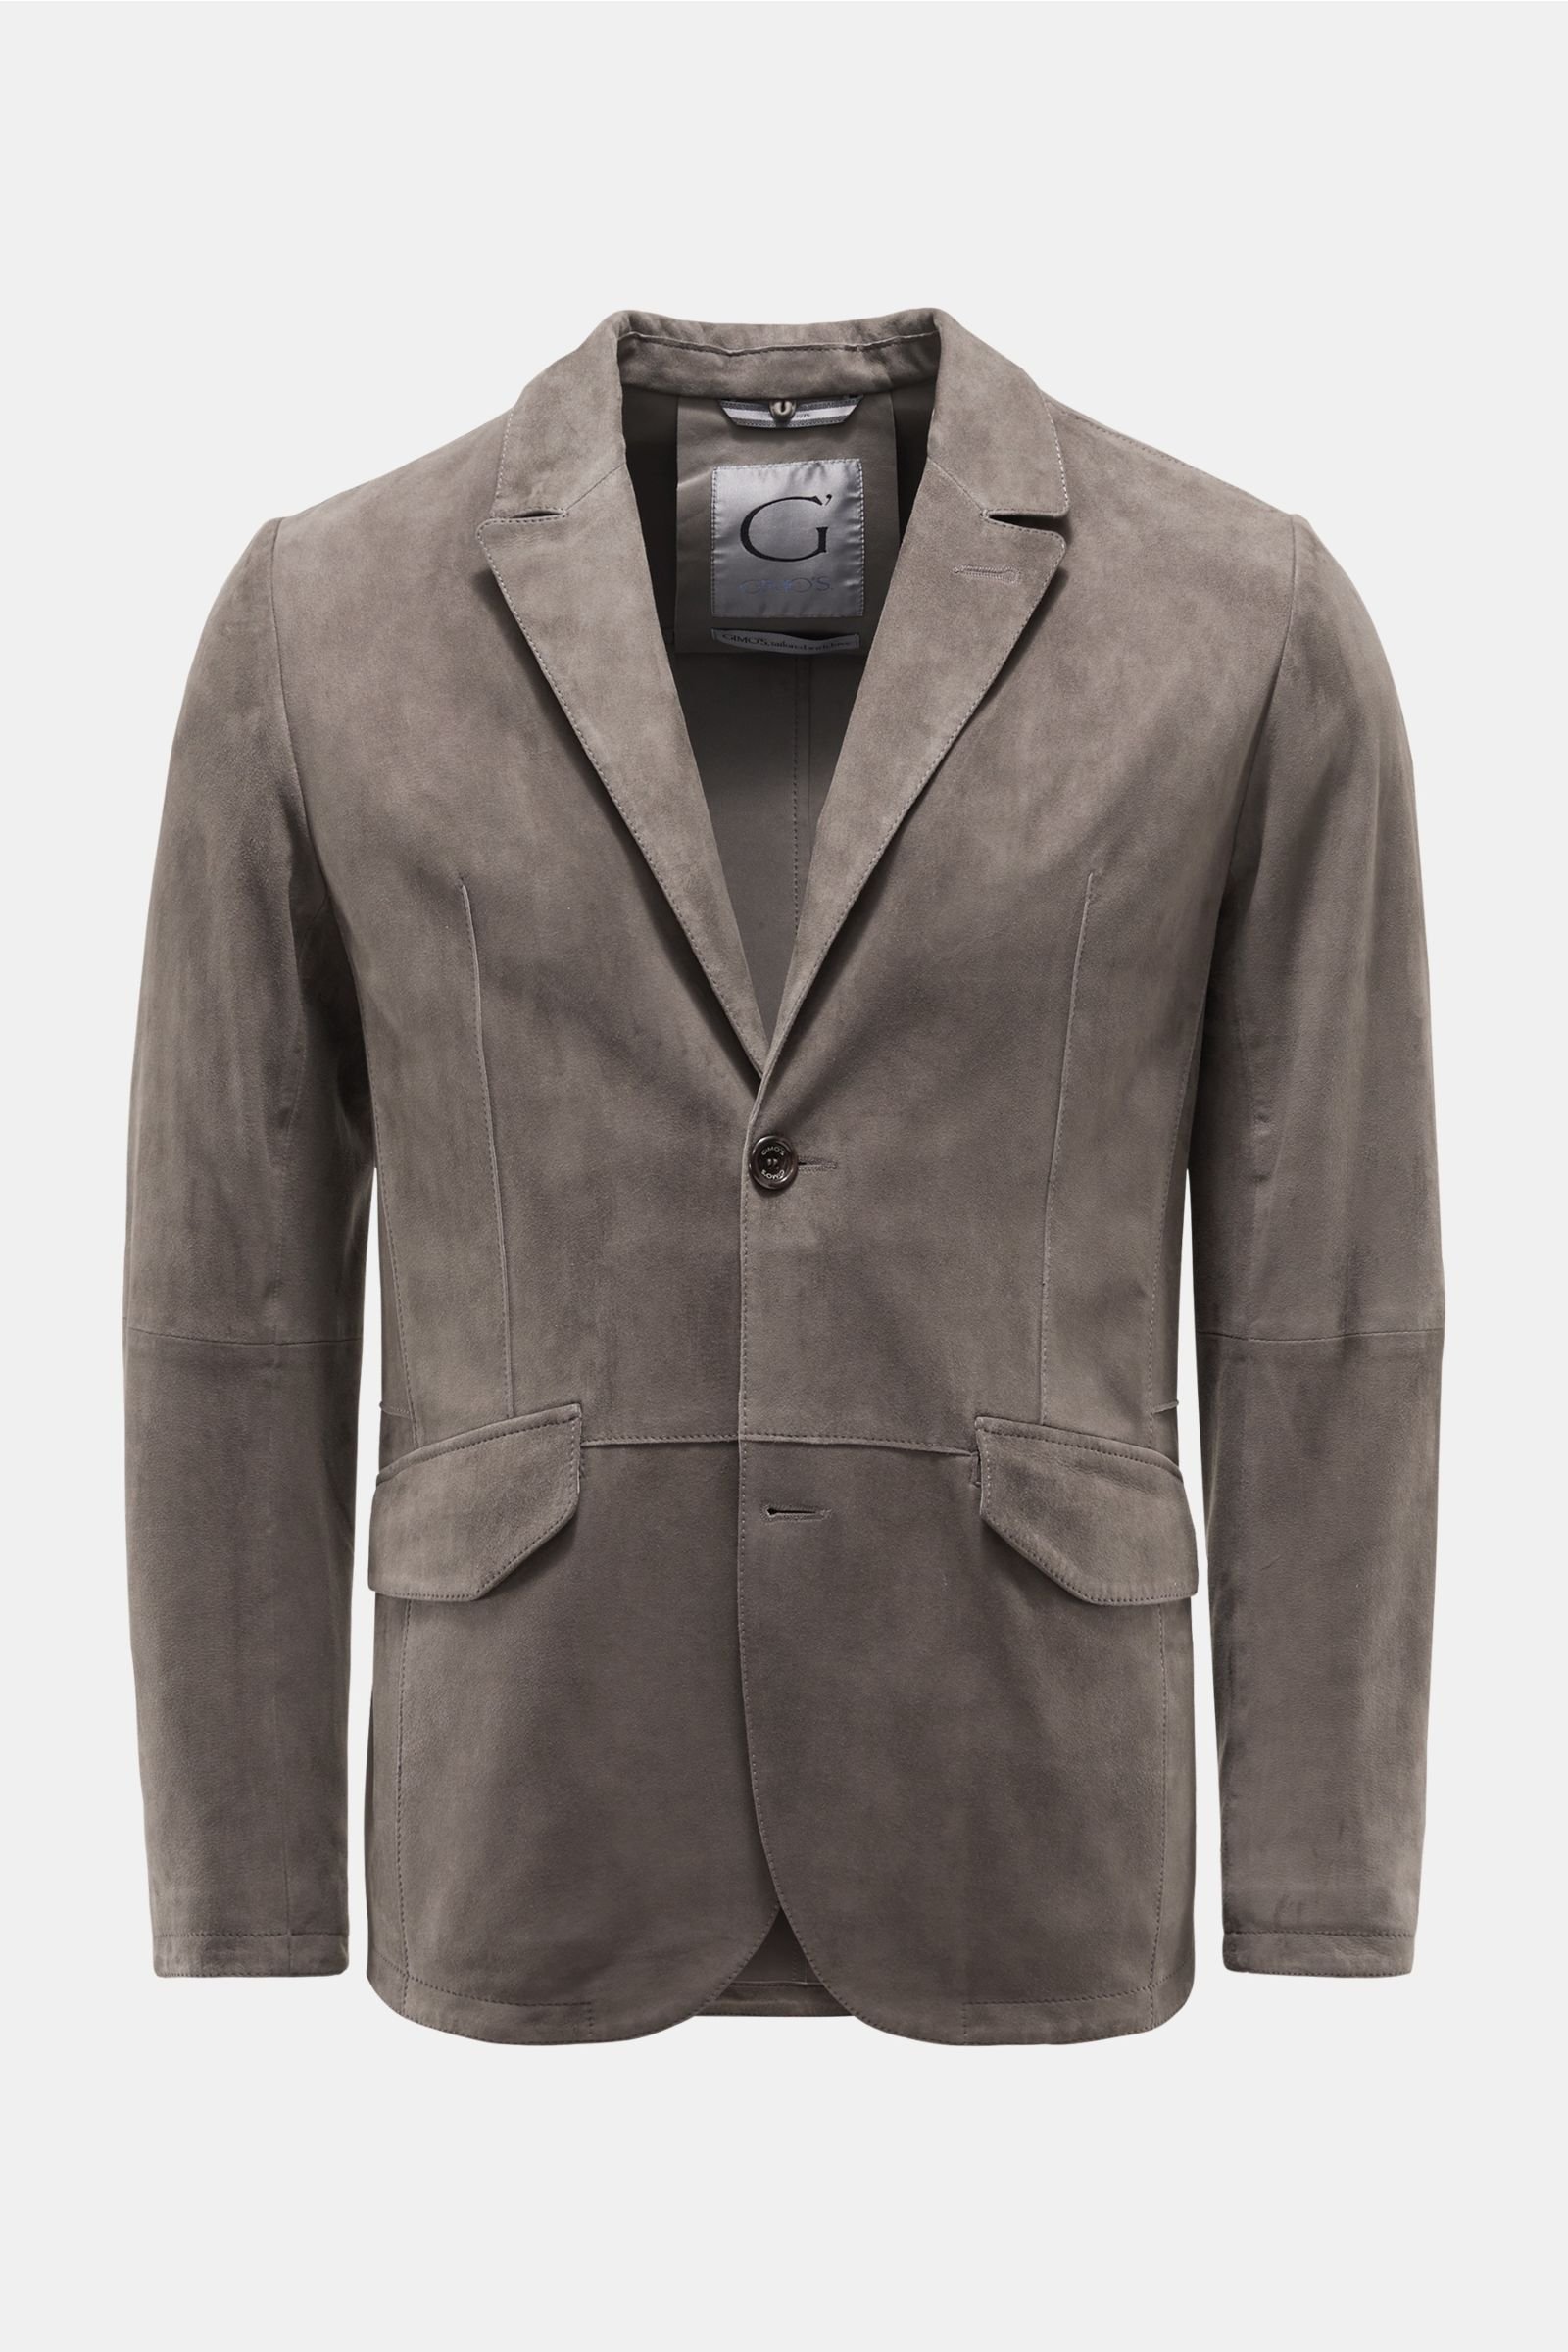 Suede jacket grey-brown